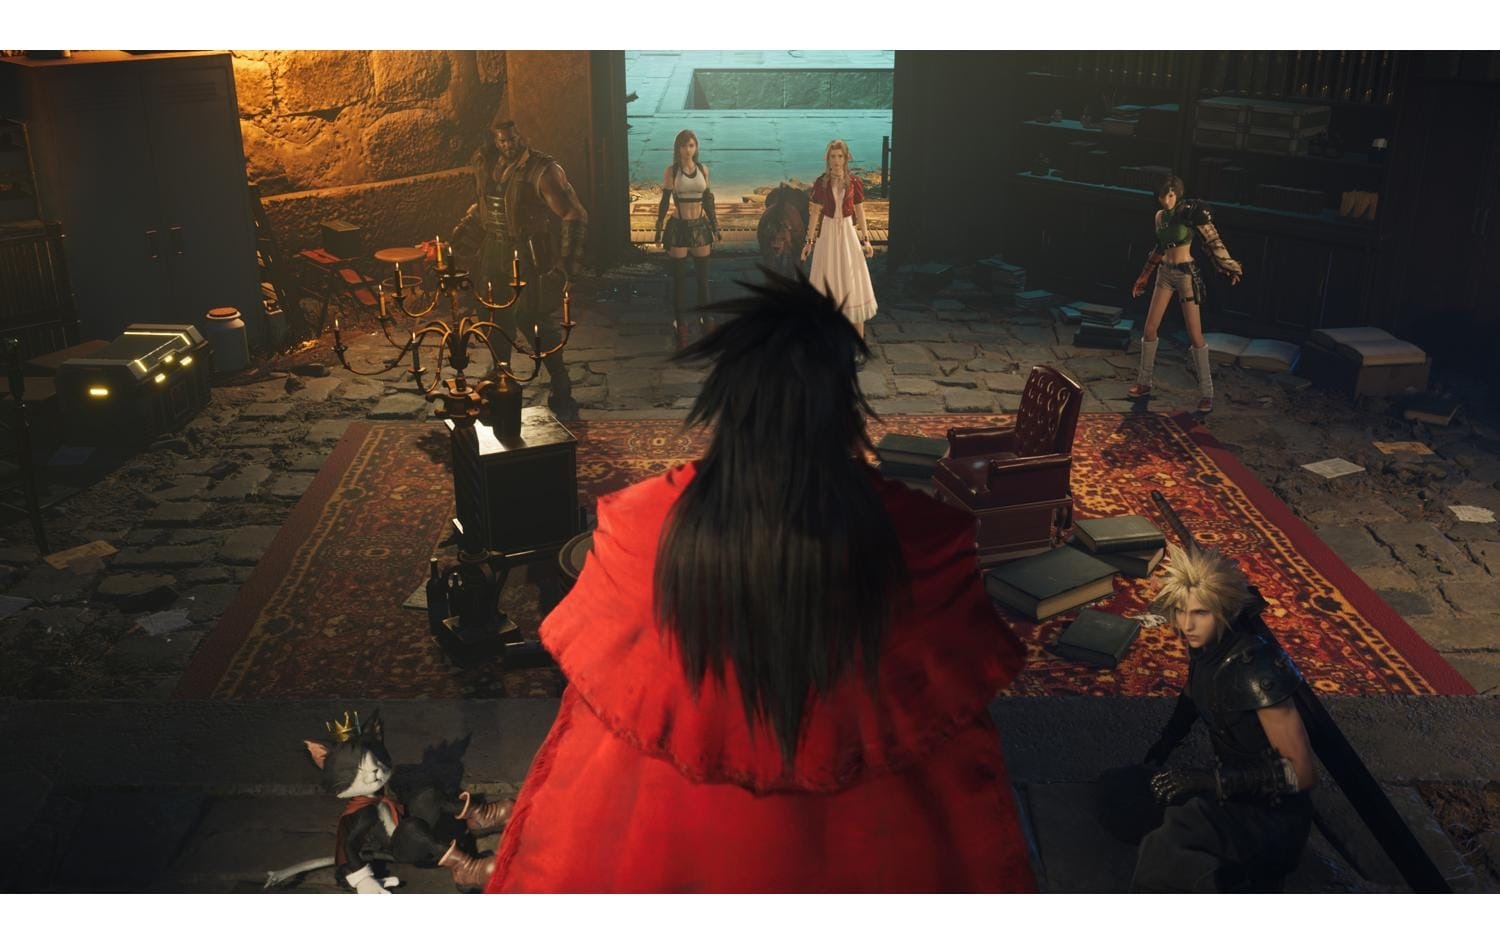 SquareEnix Spielesoftware »Enix Final Fantasy VII Rebirth«, PlayStation 5